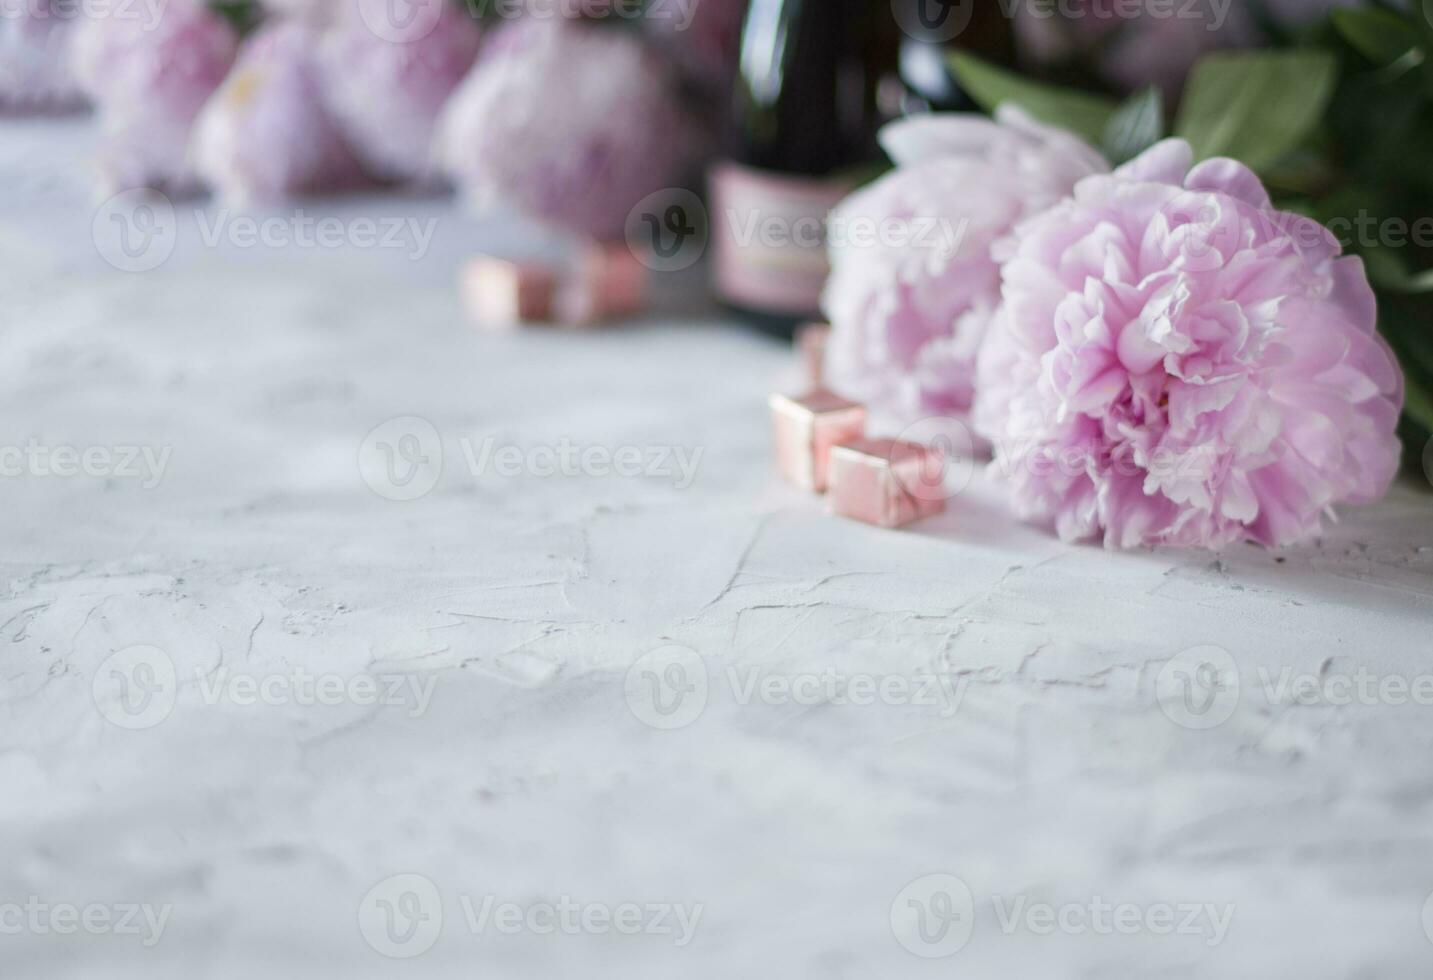 gris hormigón antecedentes con selectivo enfoque, un ramo de flores de rosado peonías, en difuminar foto